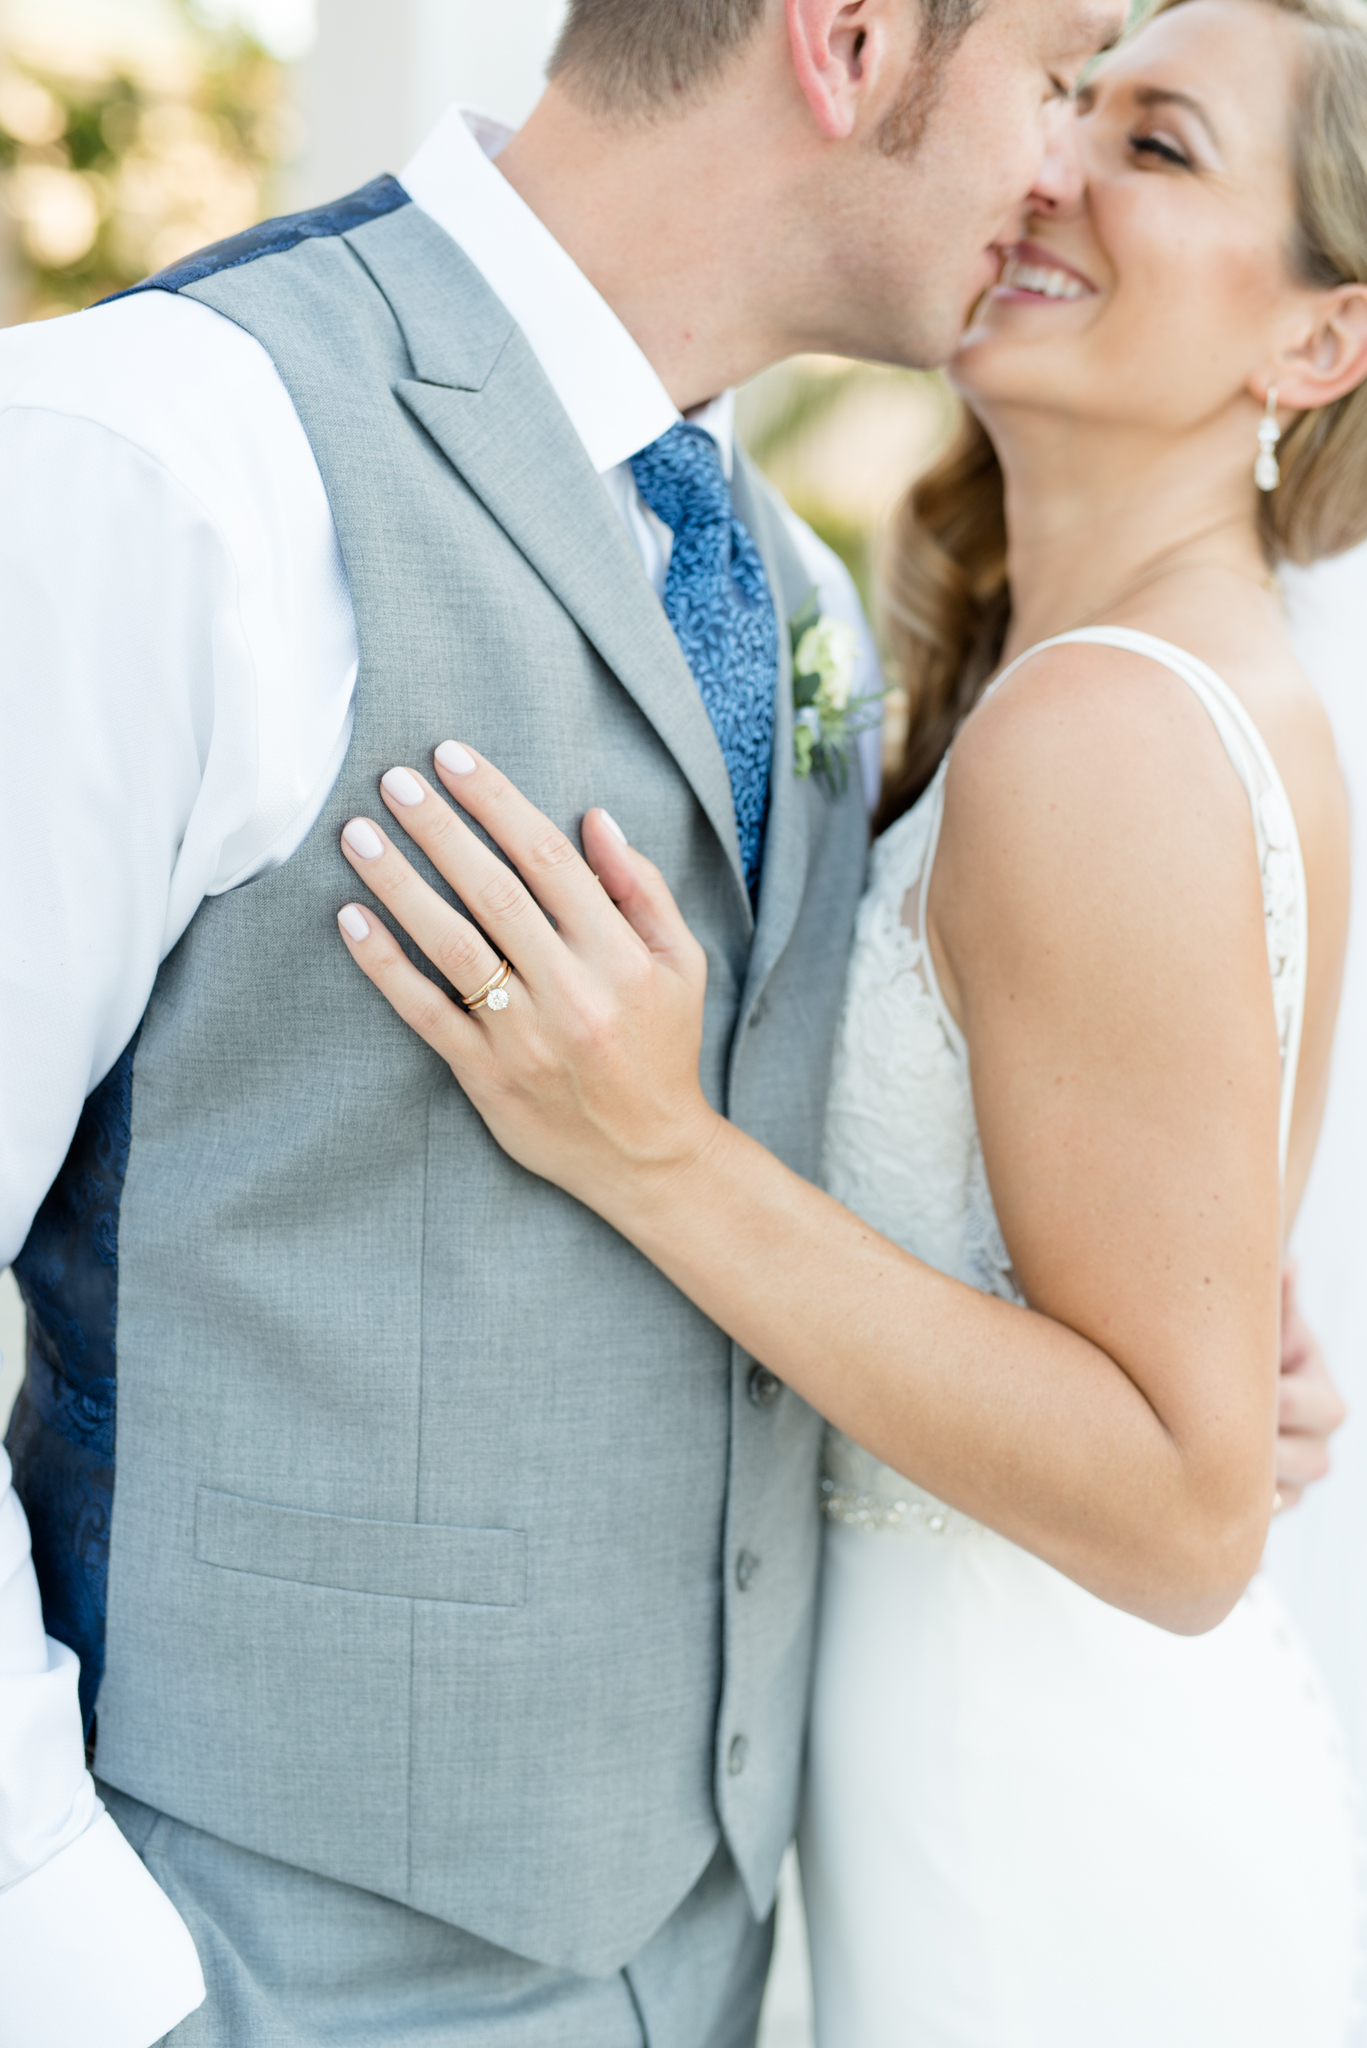 Closeup on wedding ring while wedding couple kiss.